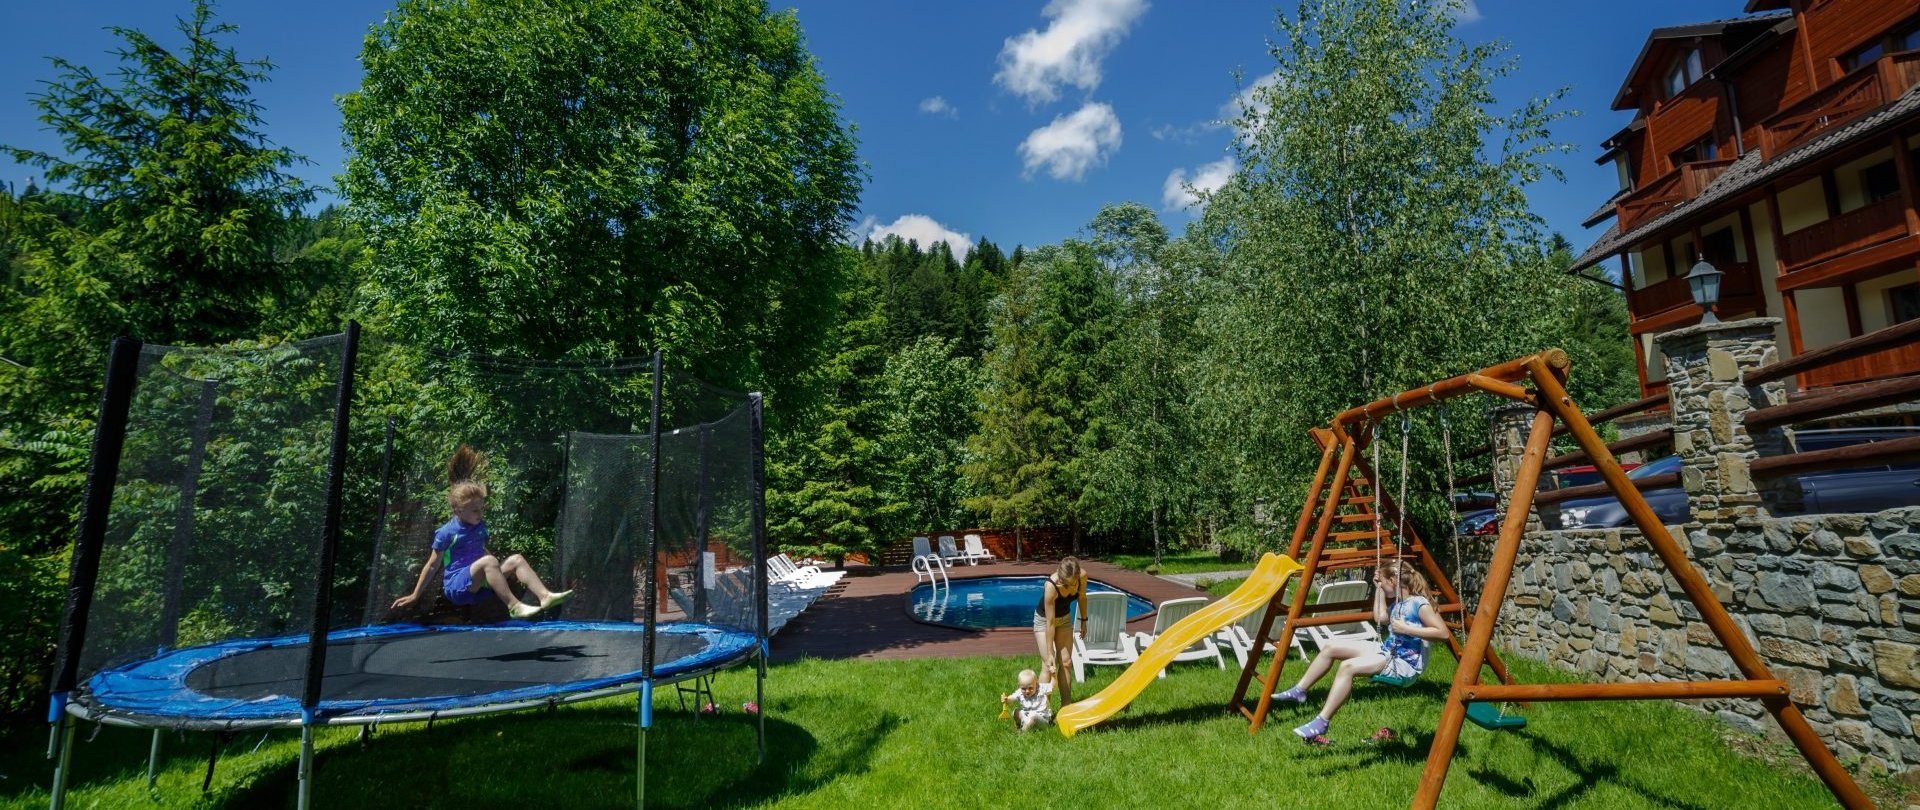 Playground (swing, slide and trampoline)